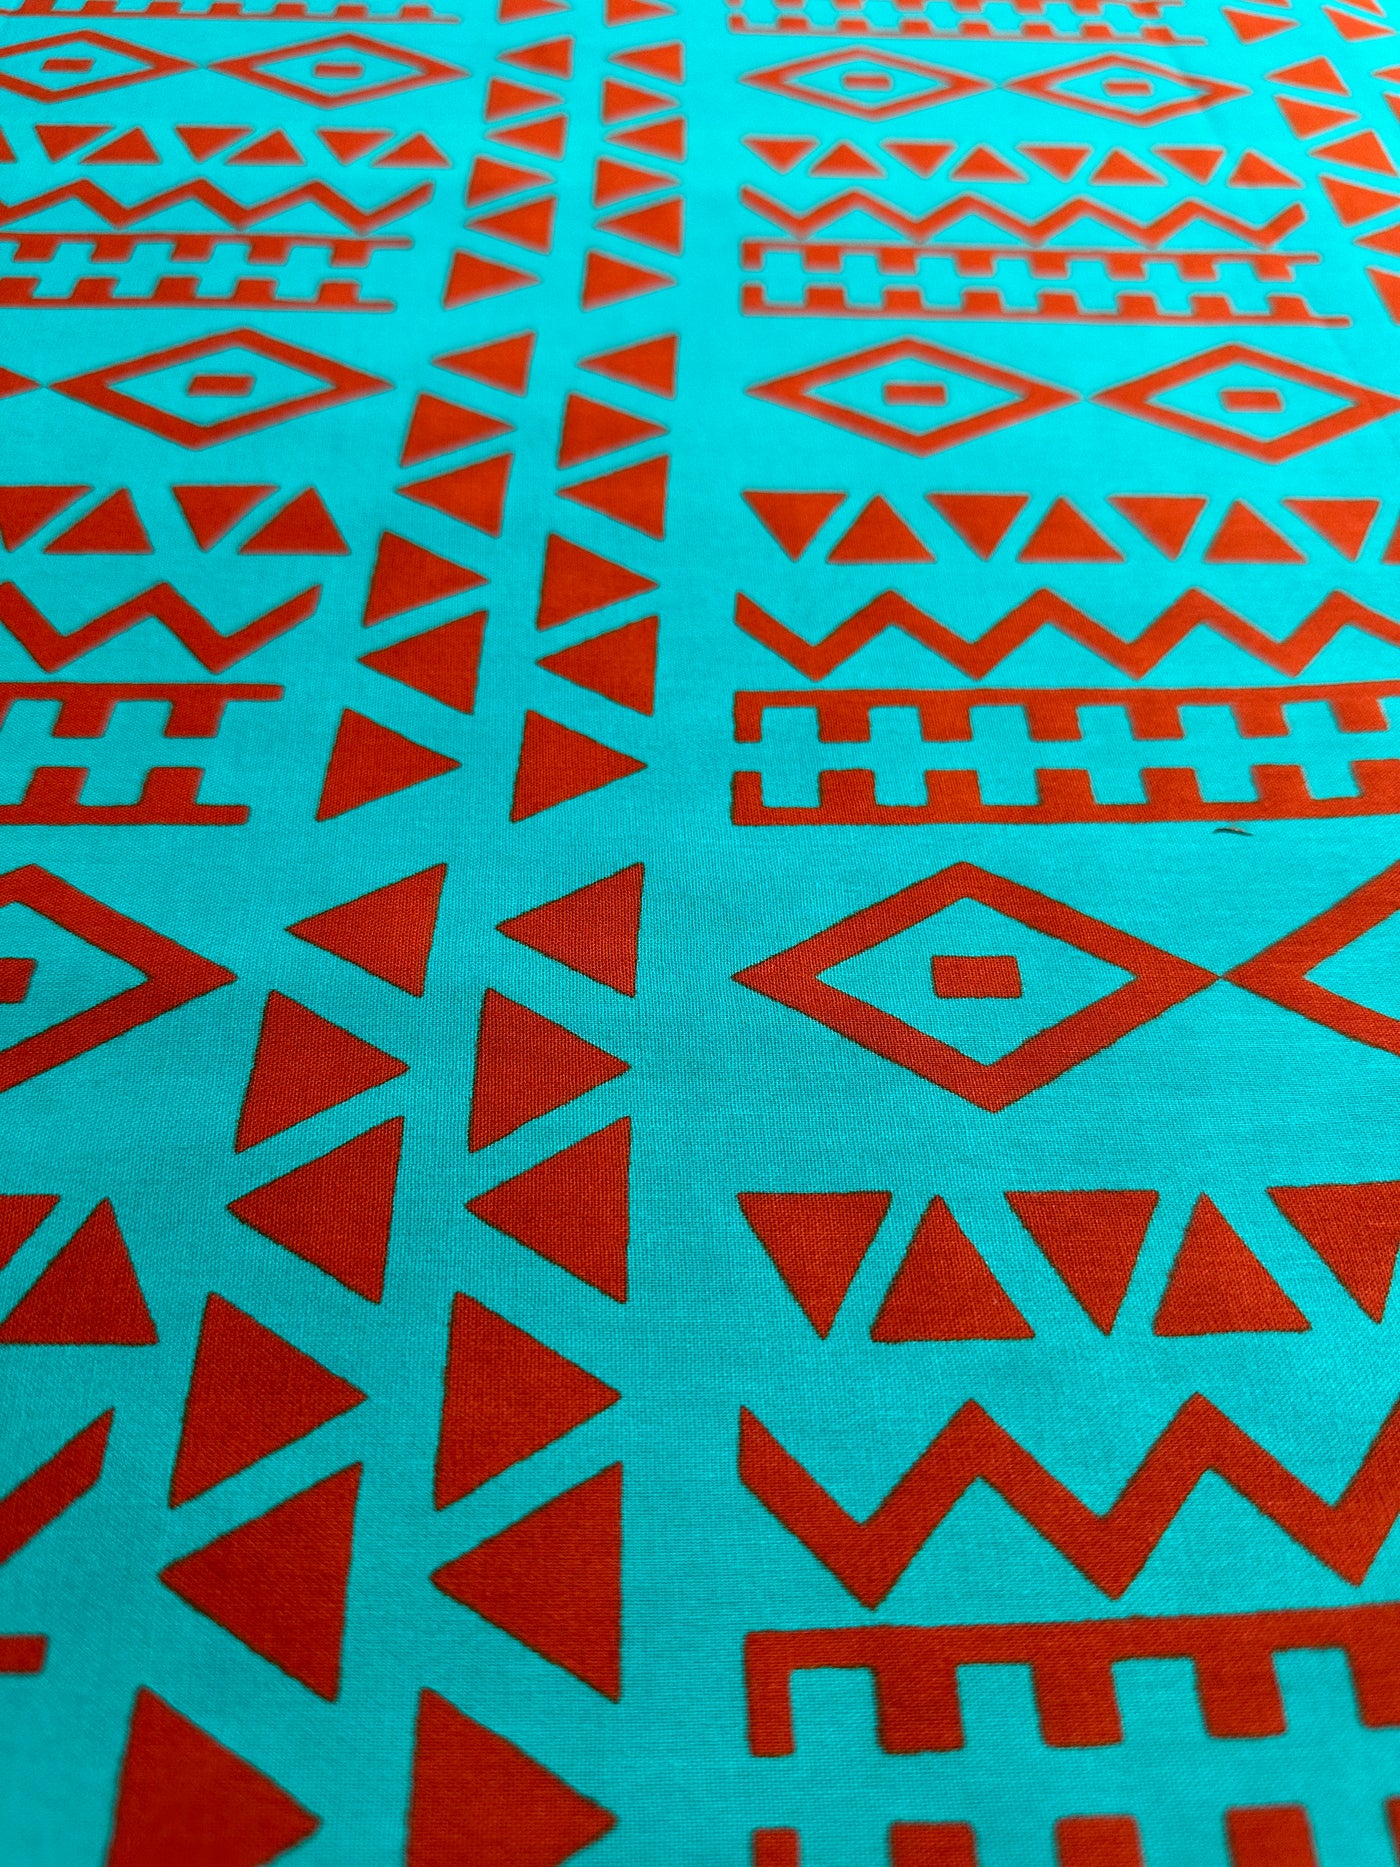 Tribal Fabric - 367201